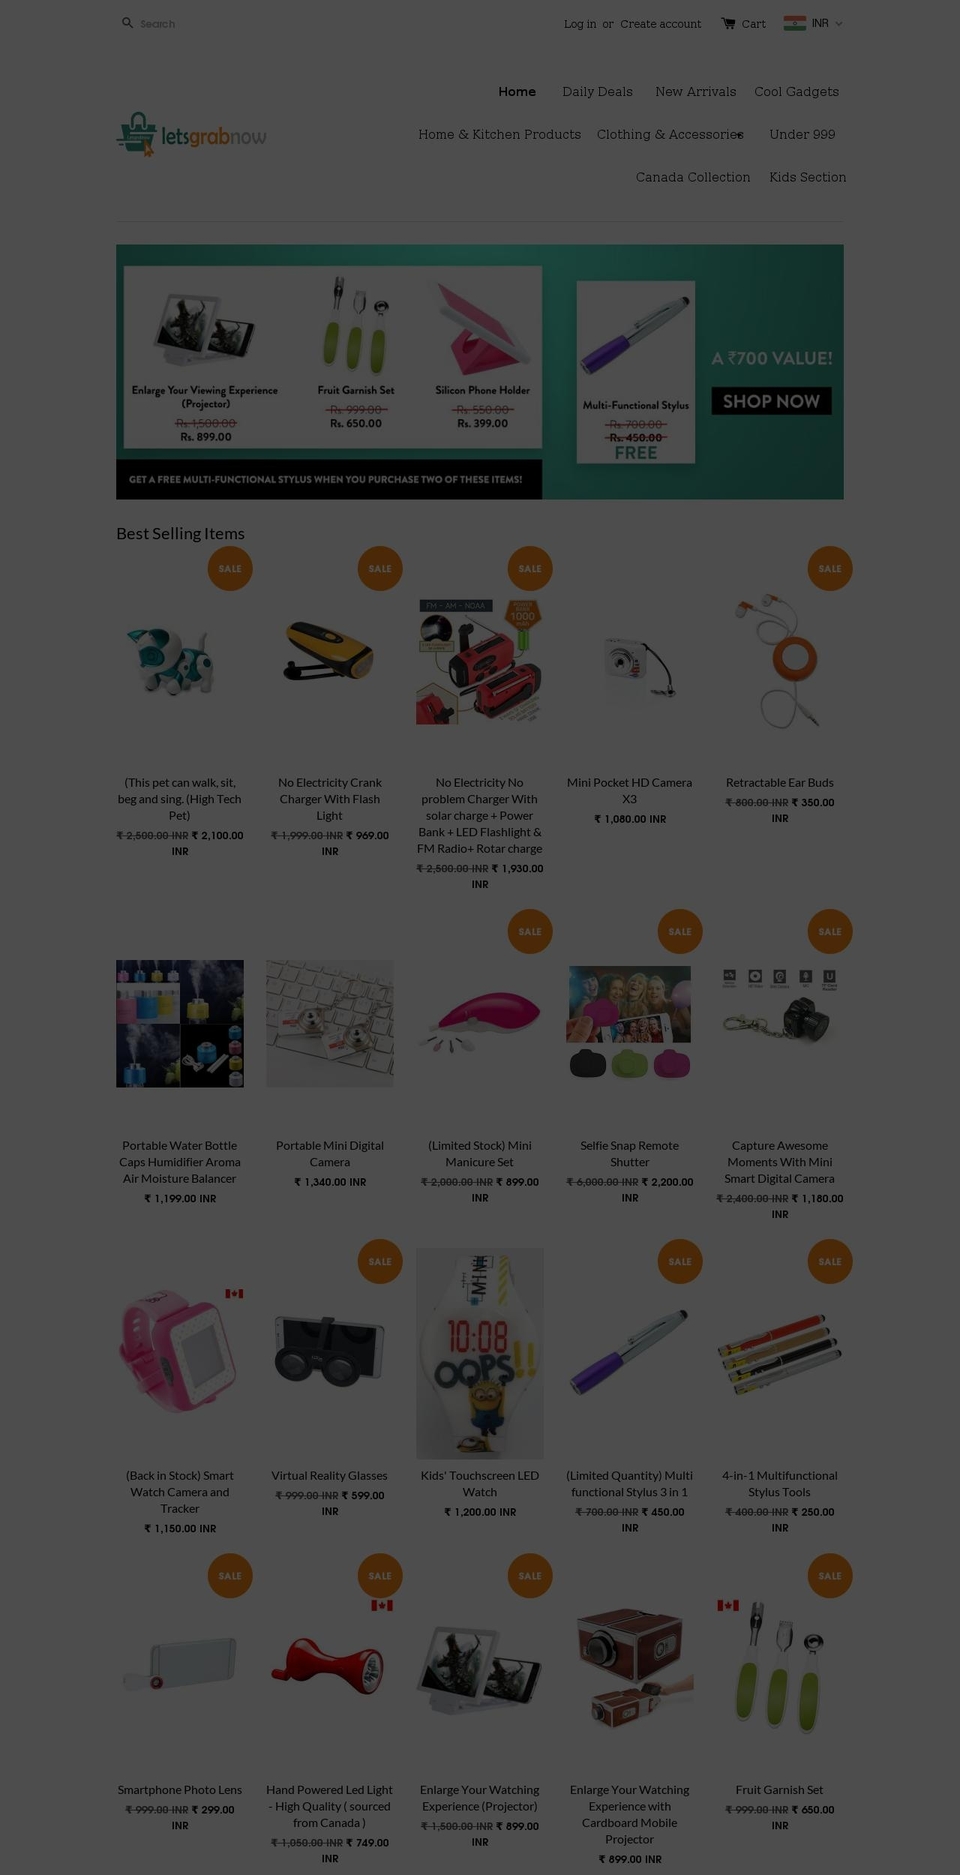 lets-grab-now.myshopify.com shopify website screenshot